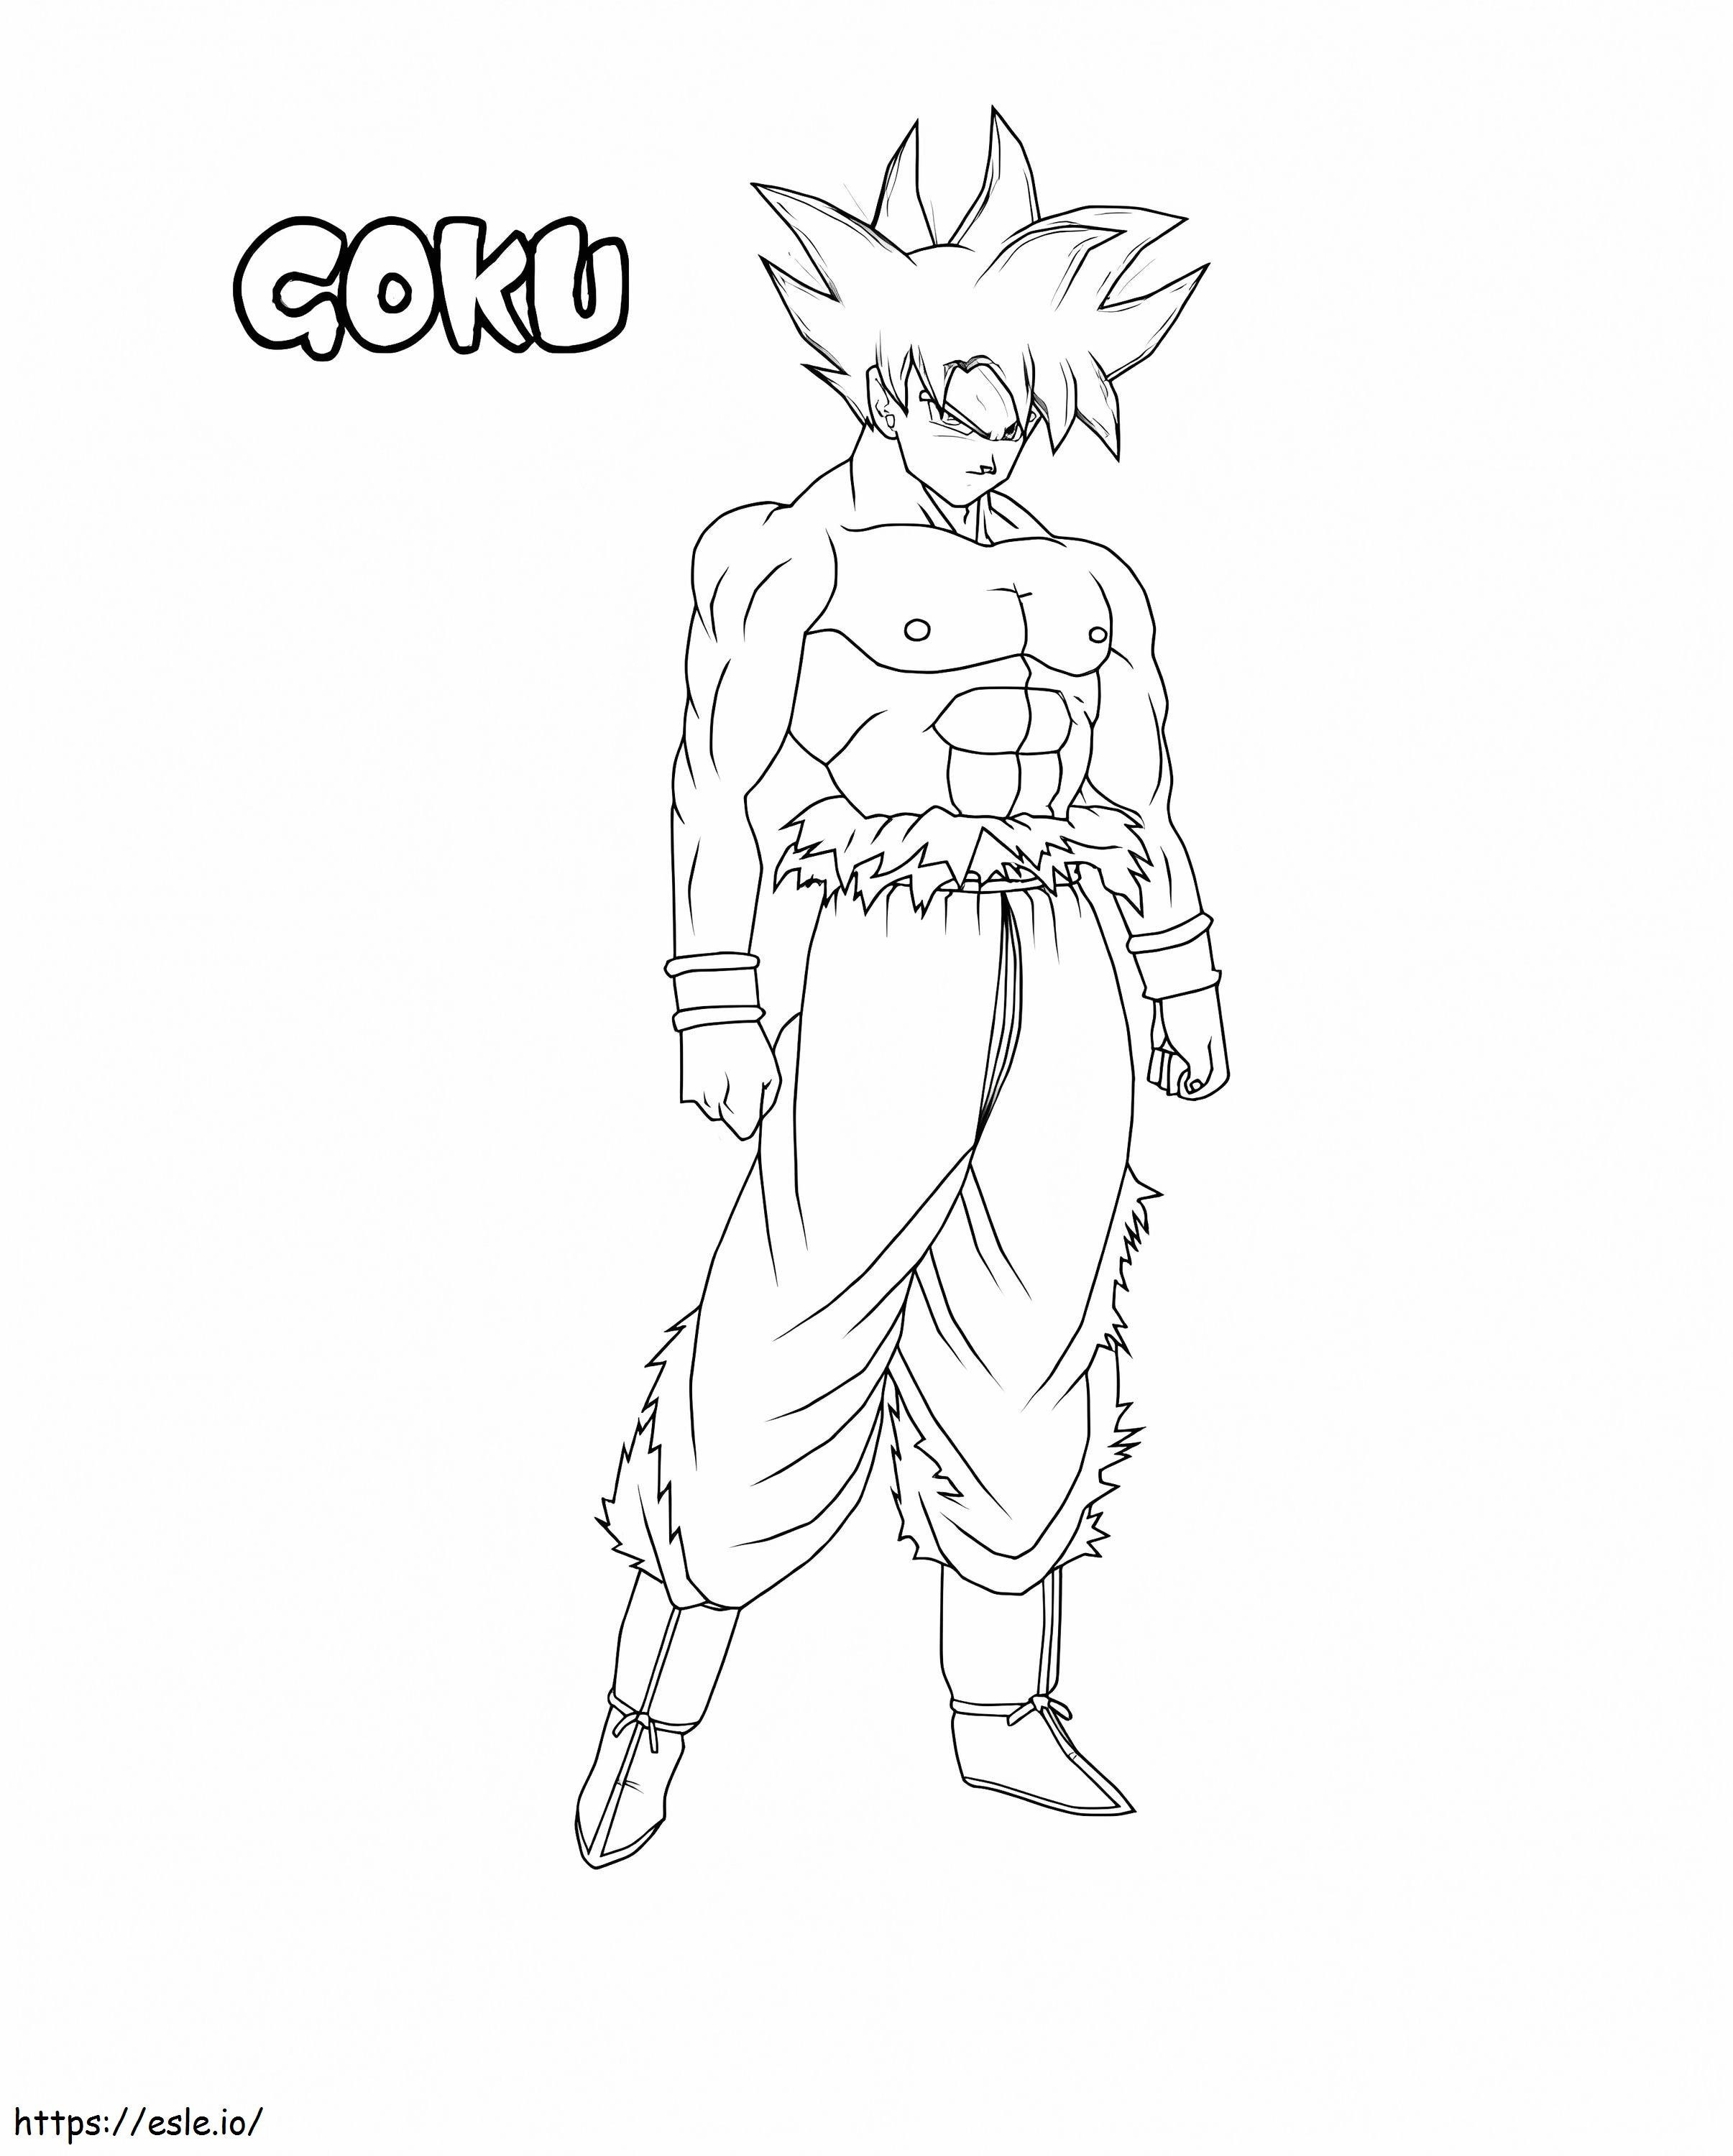 Goku Ultra Istinto da colorare